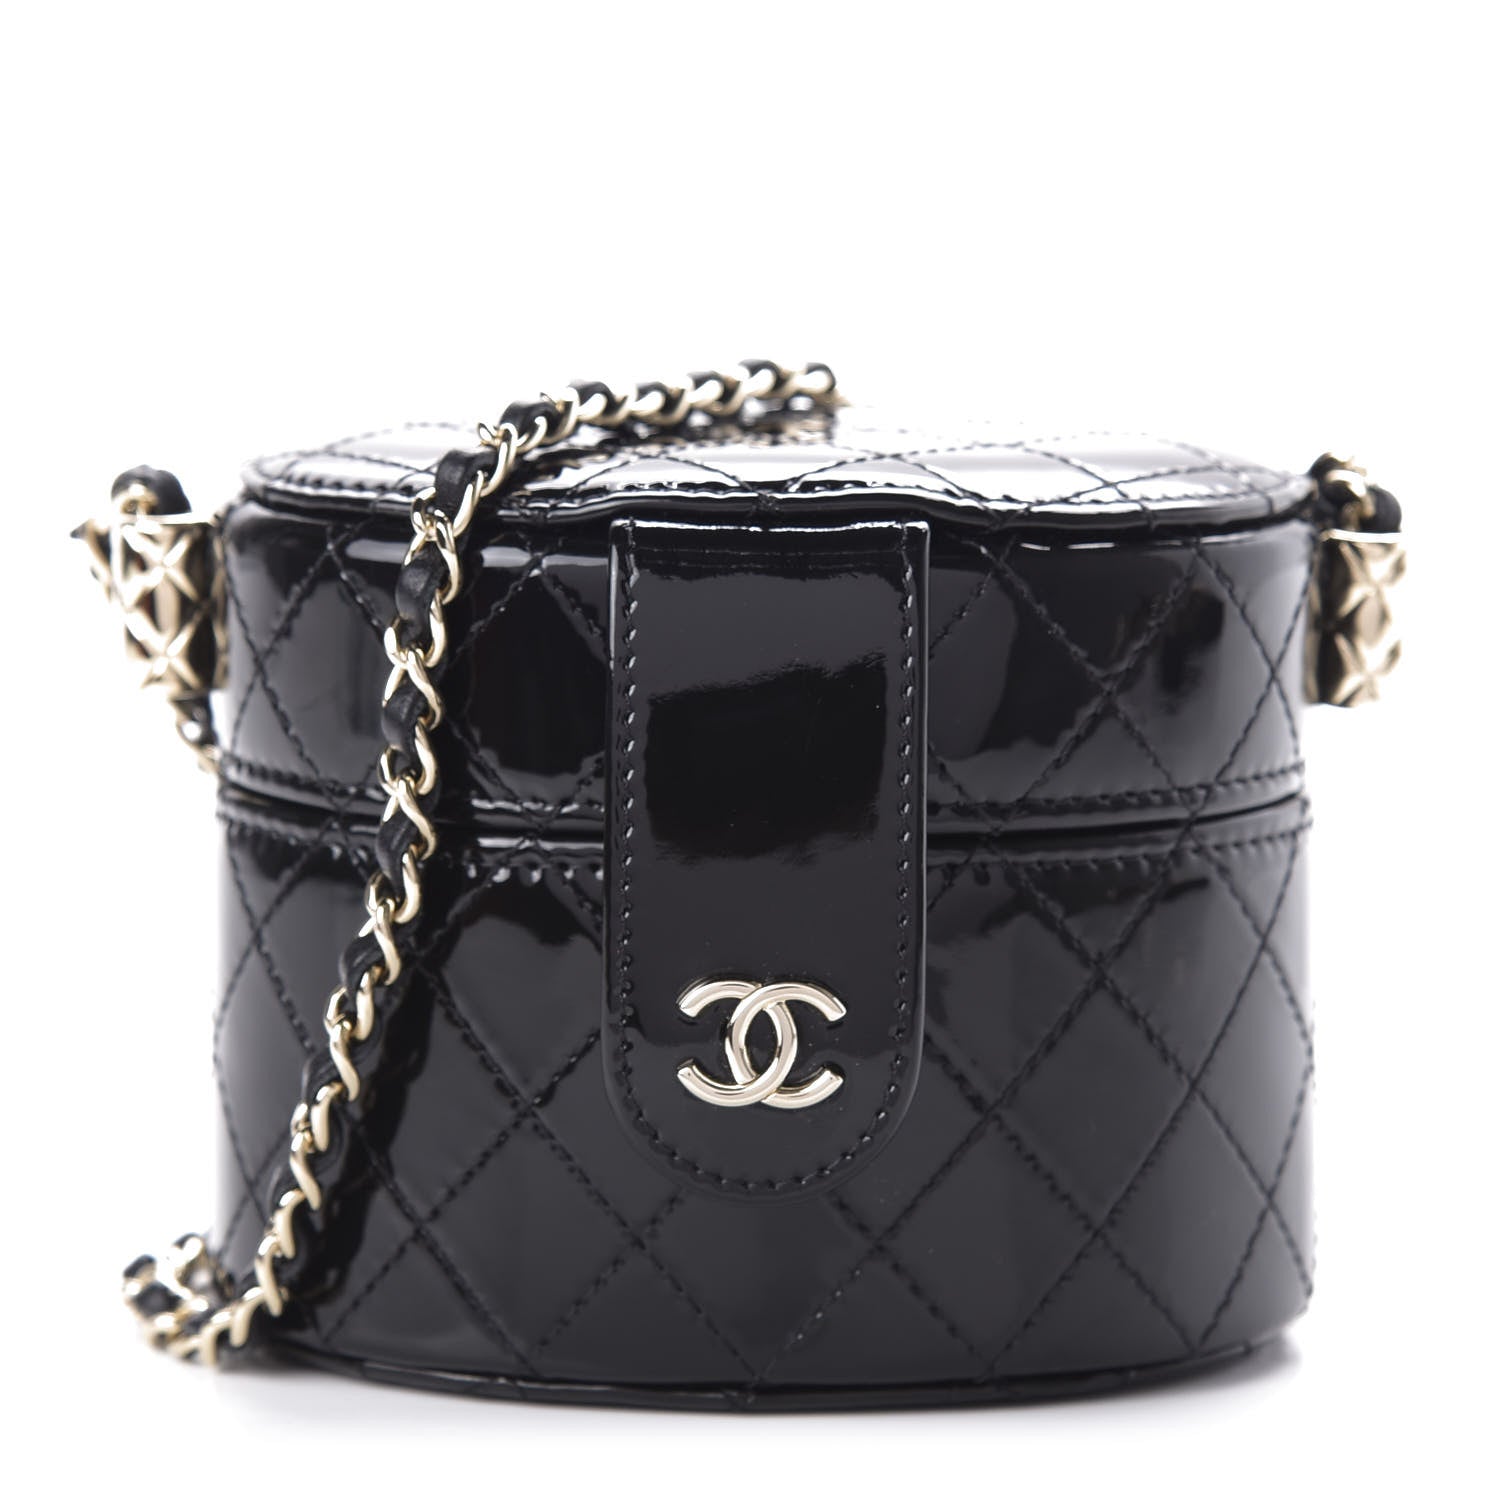 Chanel Round Patent Leater Round Handbag